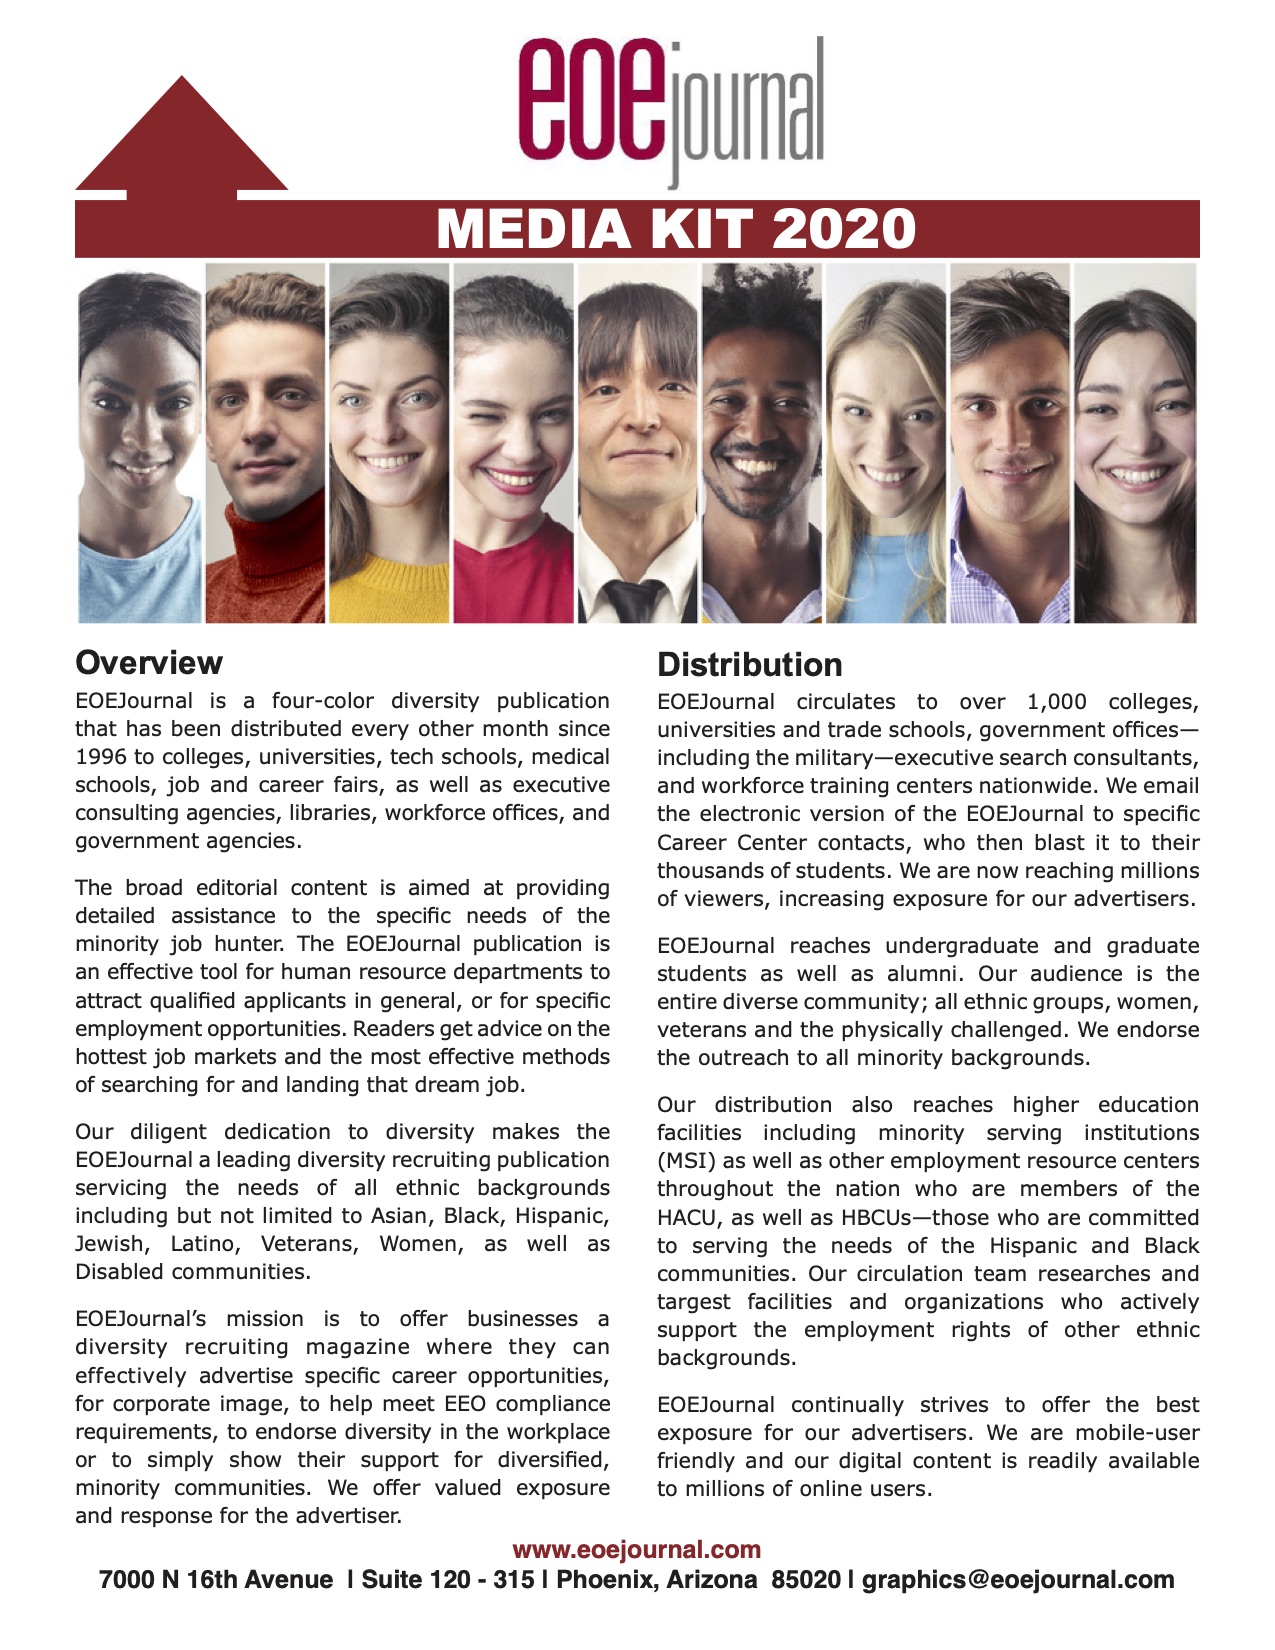 EOEJ_media kit_2020_front_page